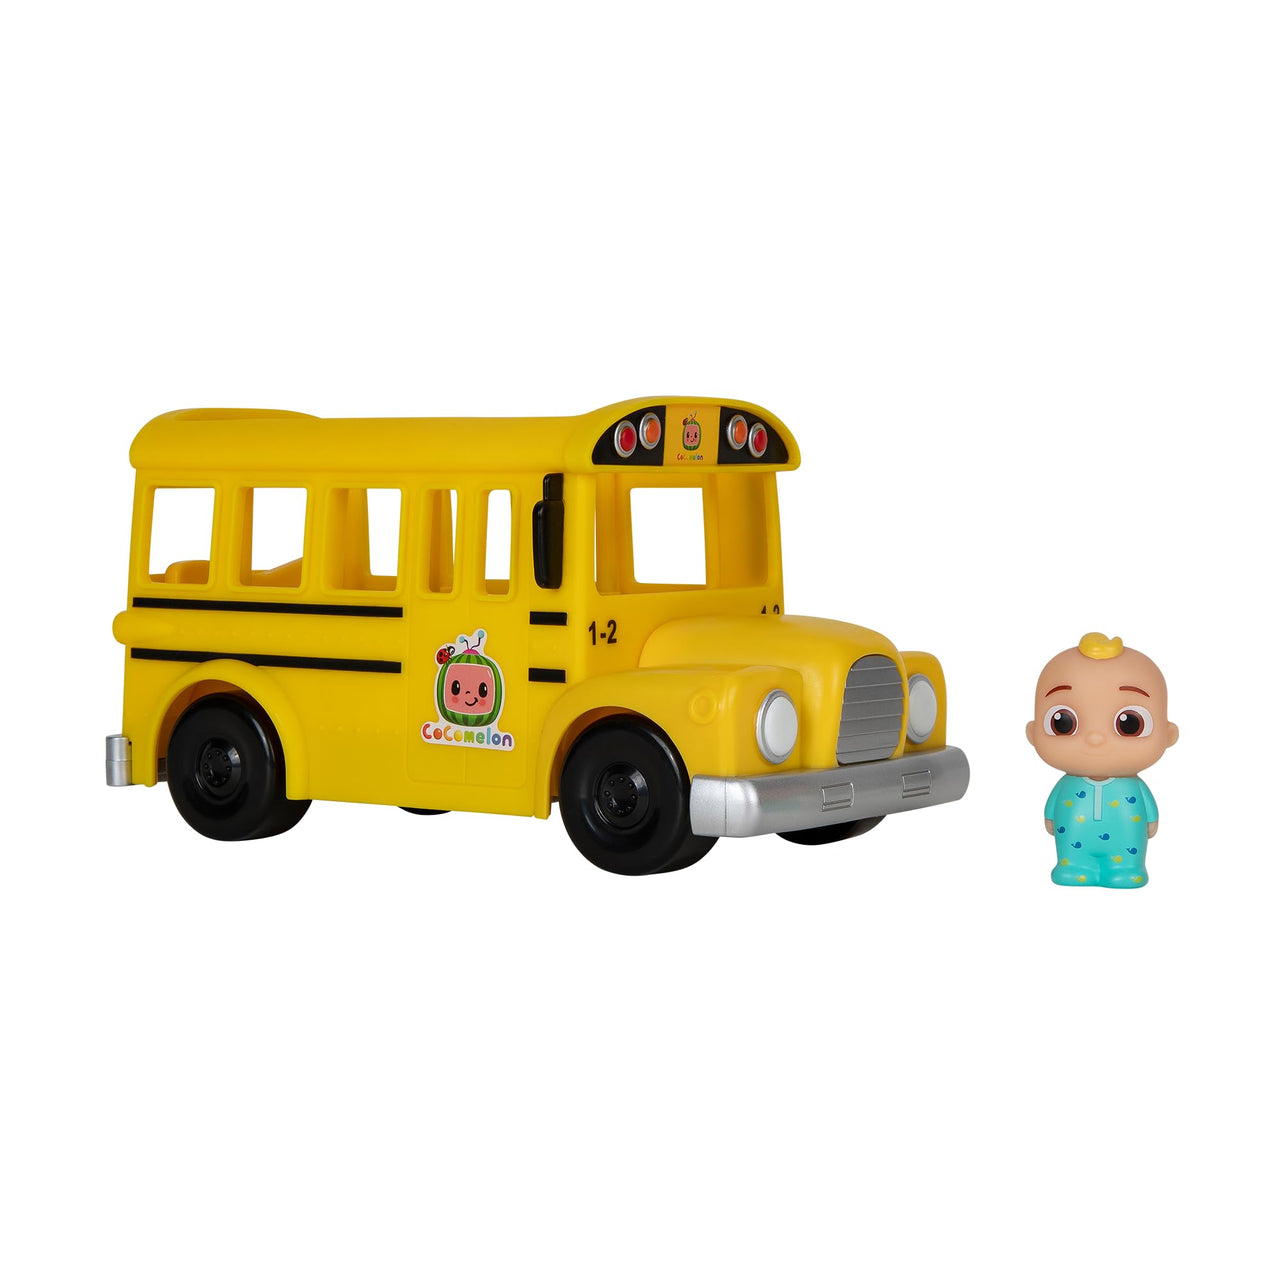 Cocomelon Musical Yellow School Bus